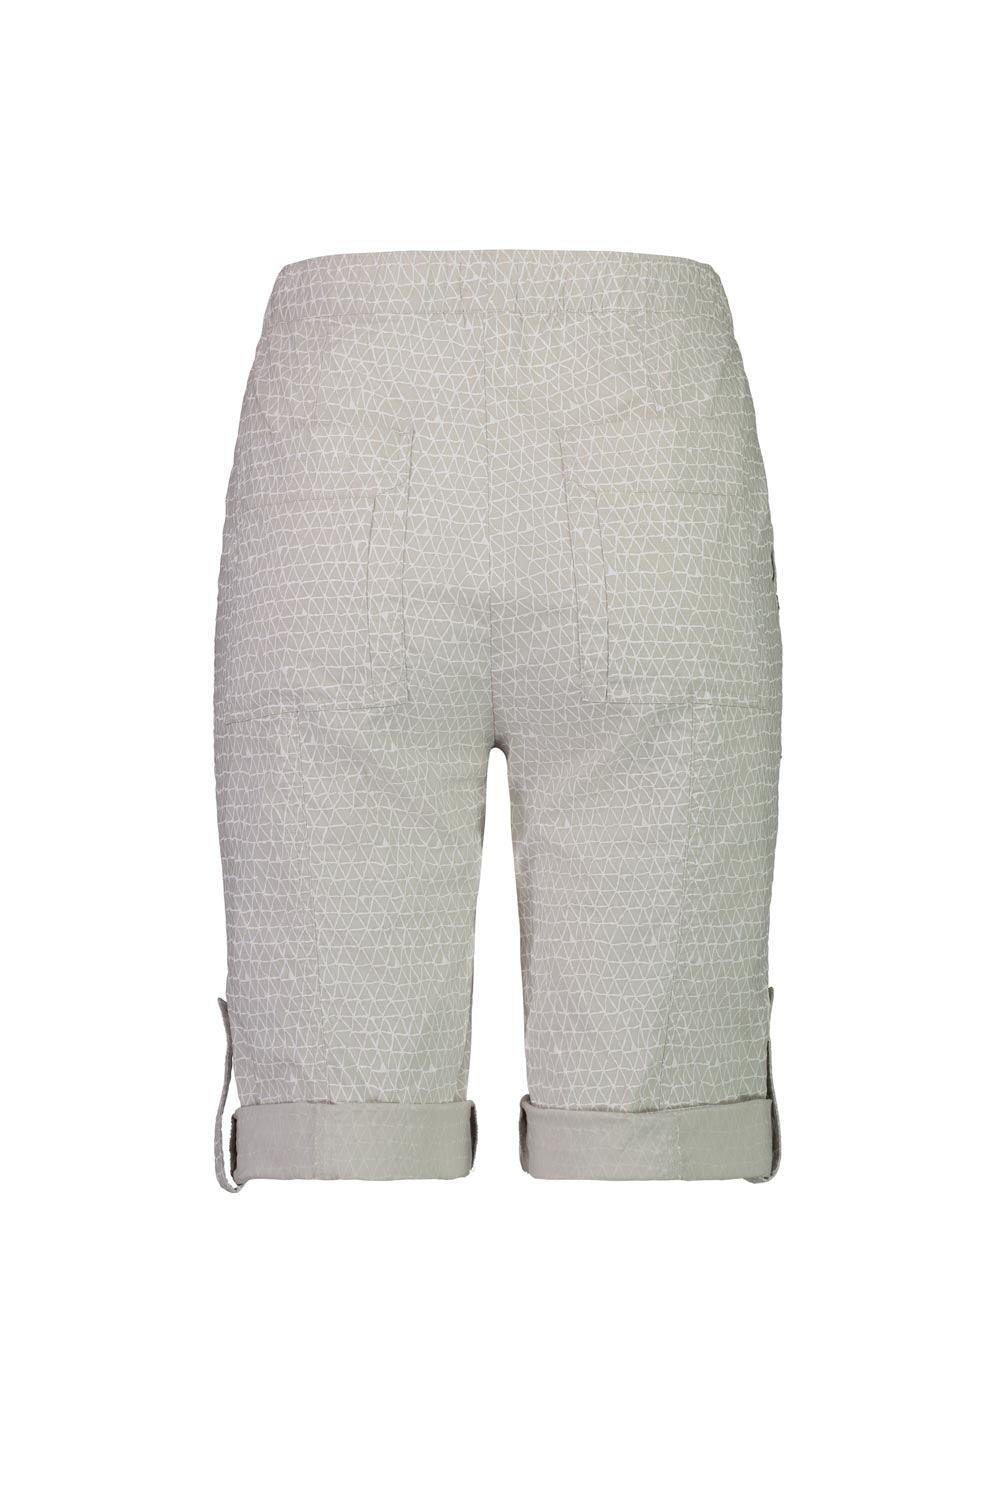 Acrobat Weave Rolled Short - Pumice/White - Short VERGE